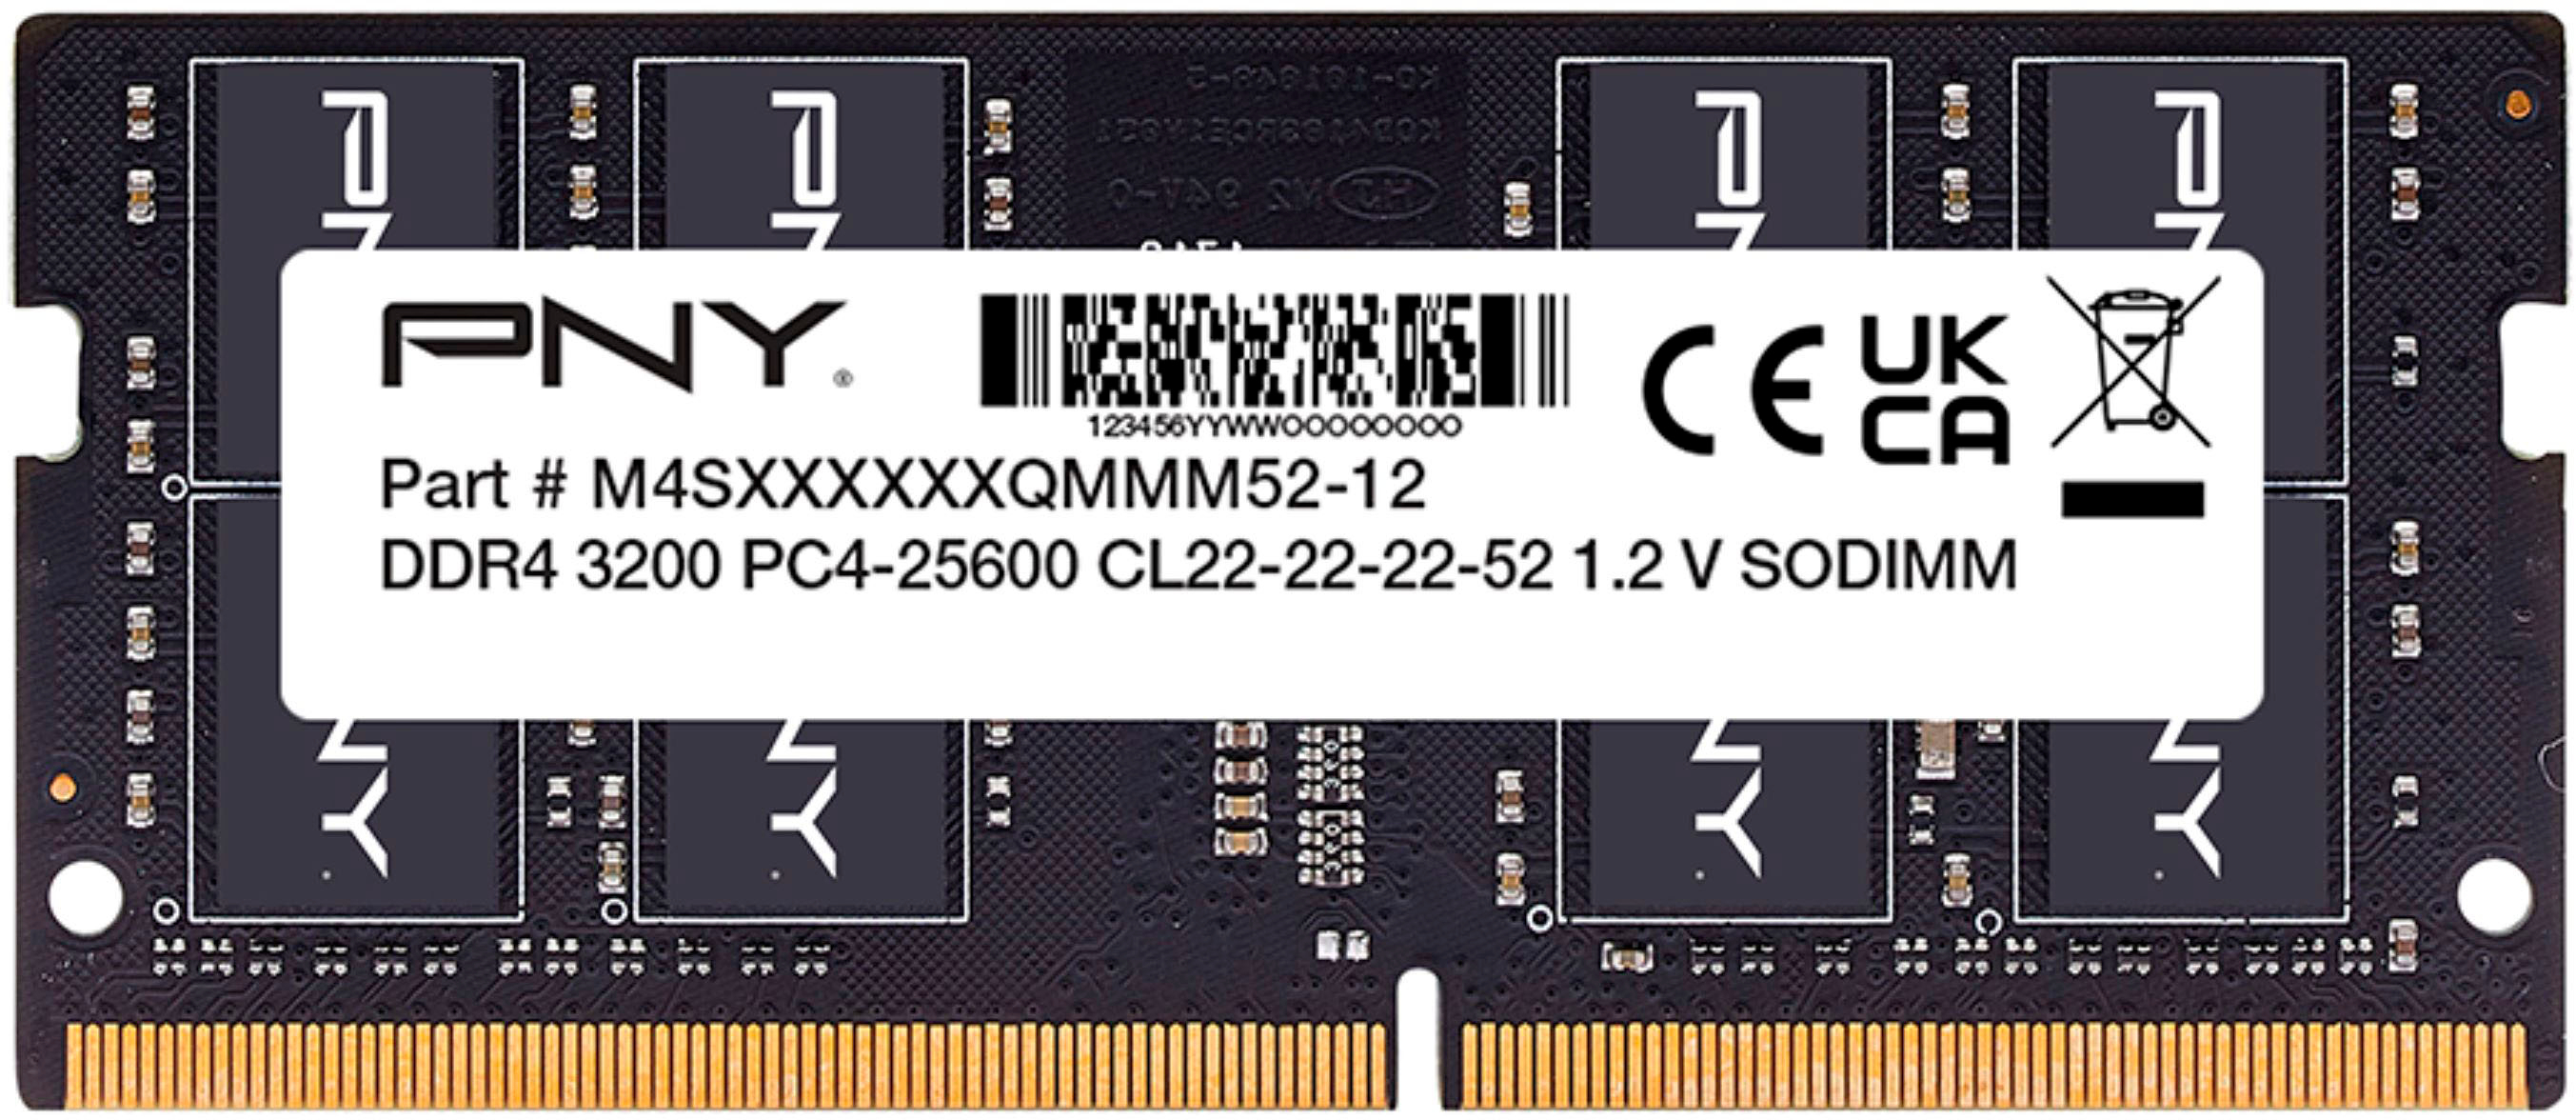 PNY Performance 8GB DDR4 DRAM 3200MHz CL22 SODIMM Notebook/Laptop Memory  Black MN8GSD43200-TB - Best Buy